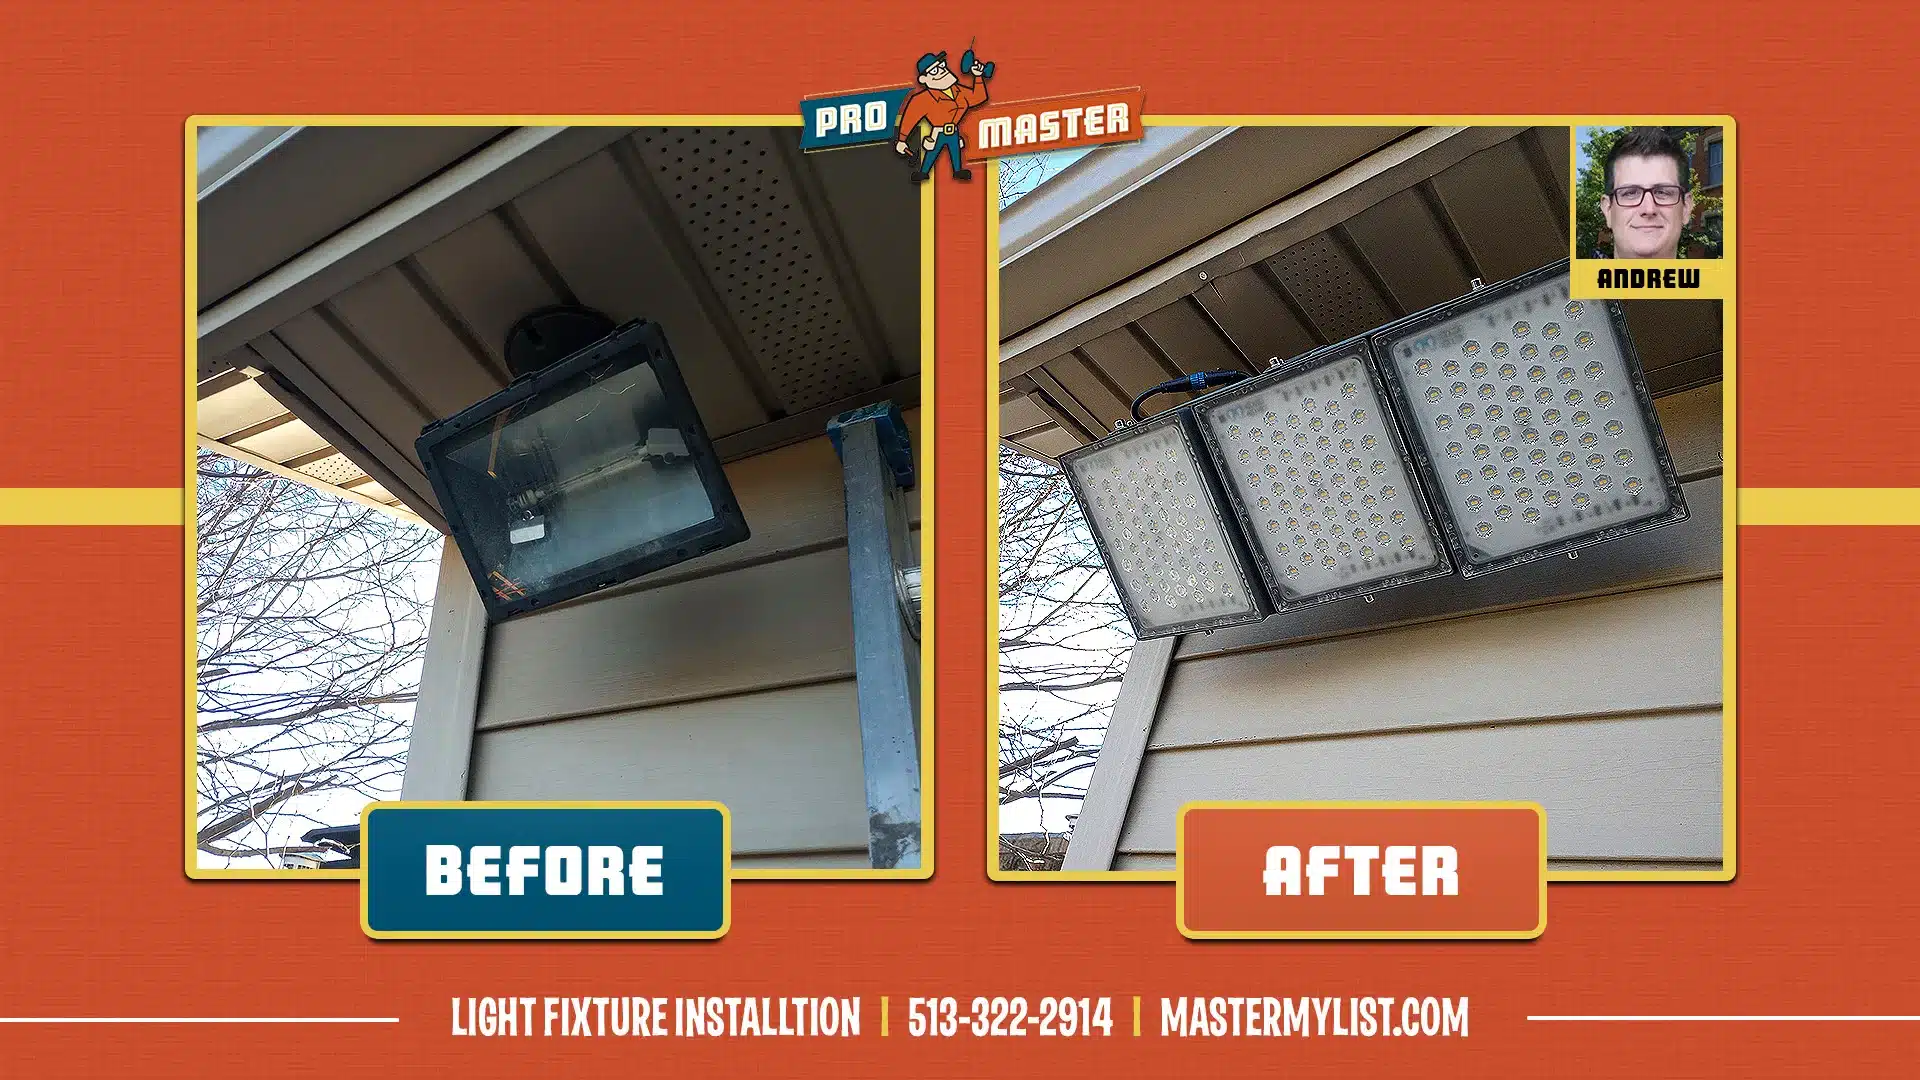 Exterior light fixture installation by ProMaster Home Repair in Cincinnati, OH.